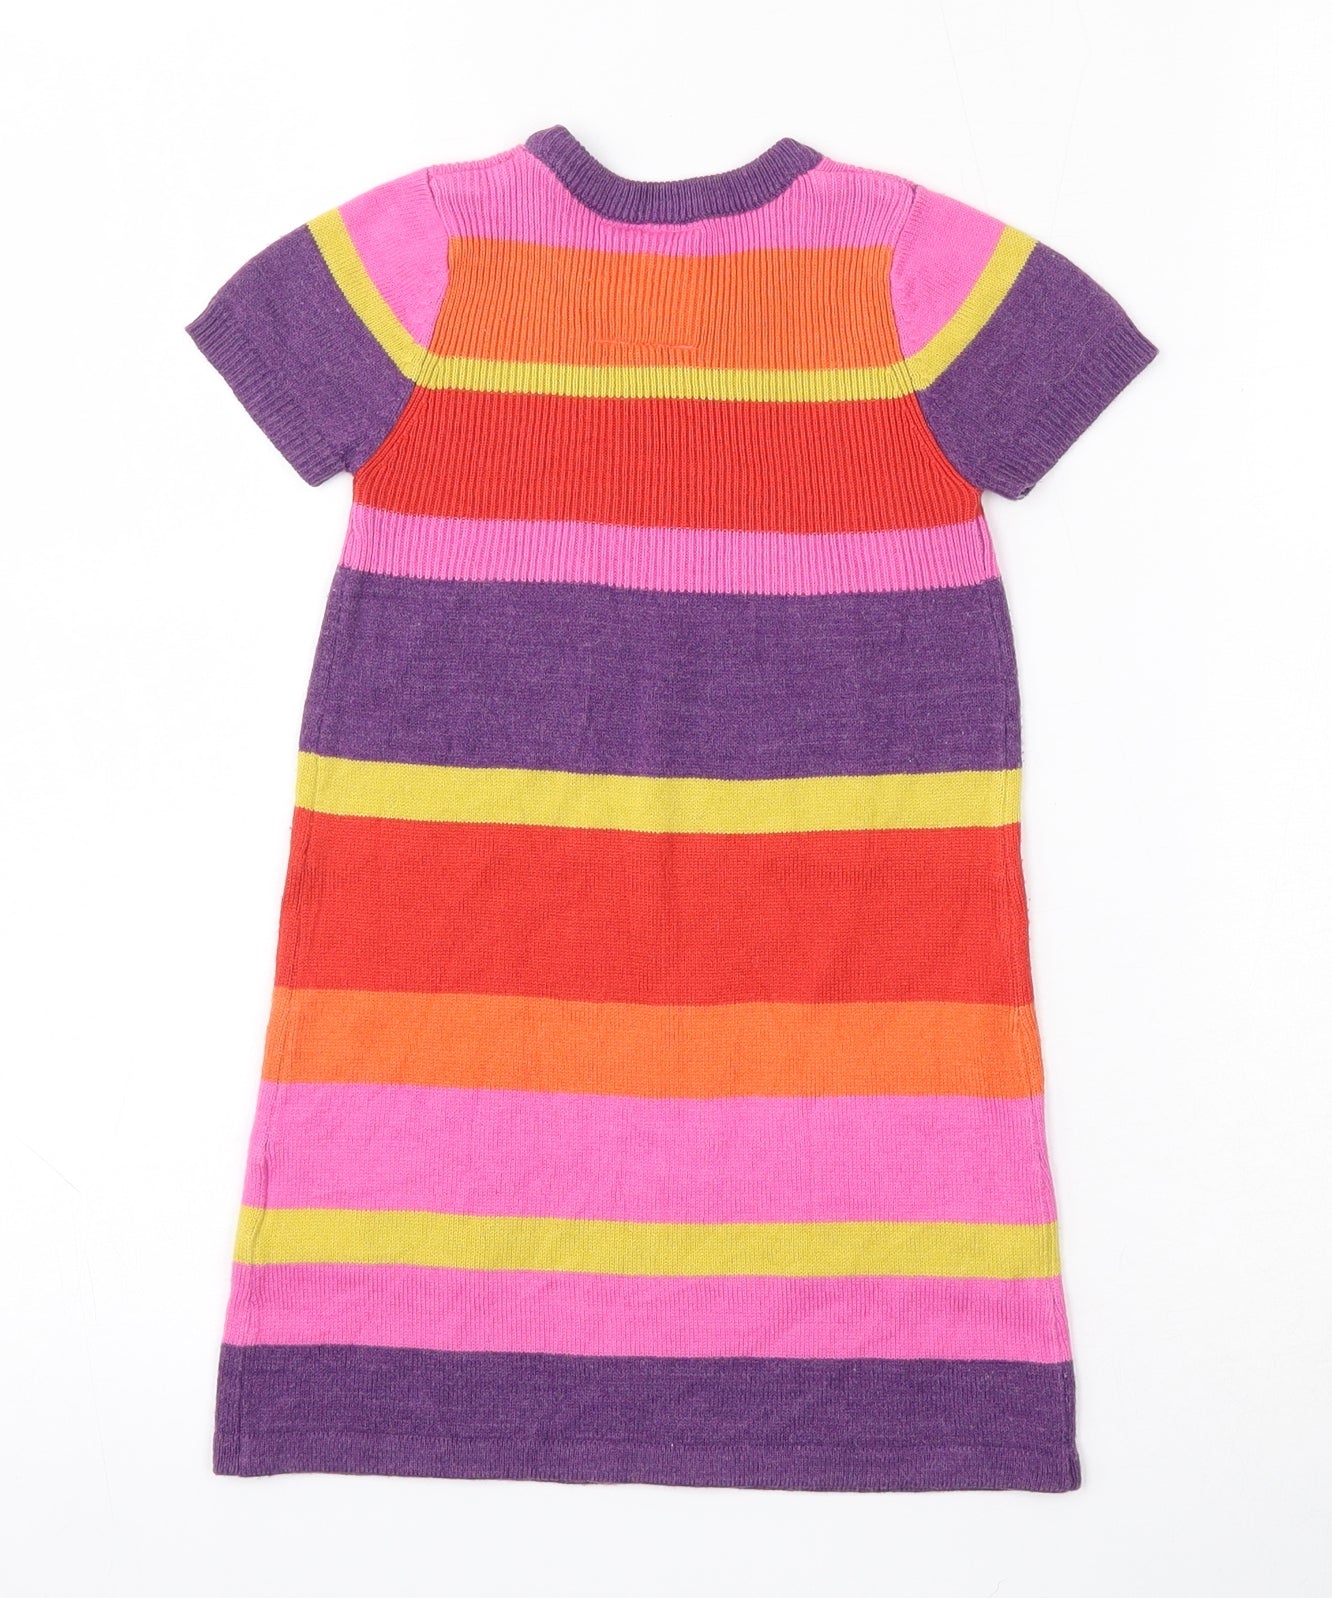 John Lewis Girls Multicoloured Colourblock Acrylic Jumper Dress  Size 2 Years  Round Neck